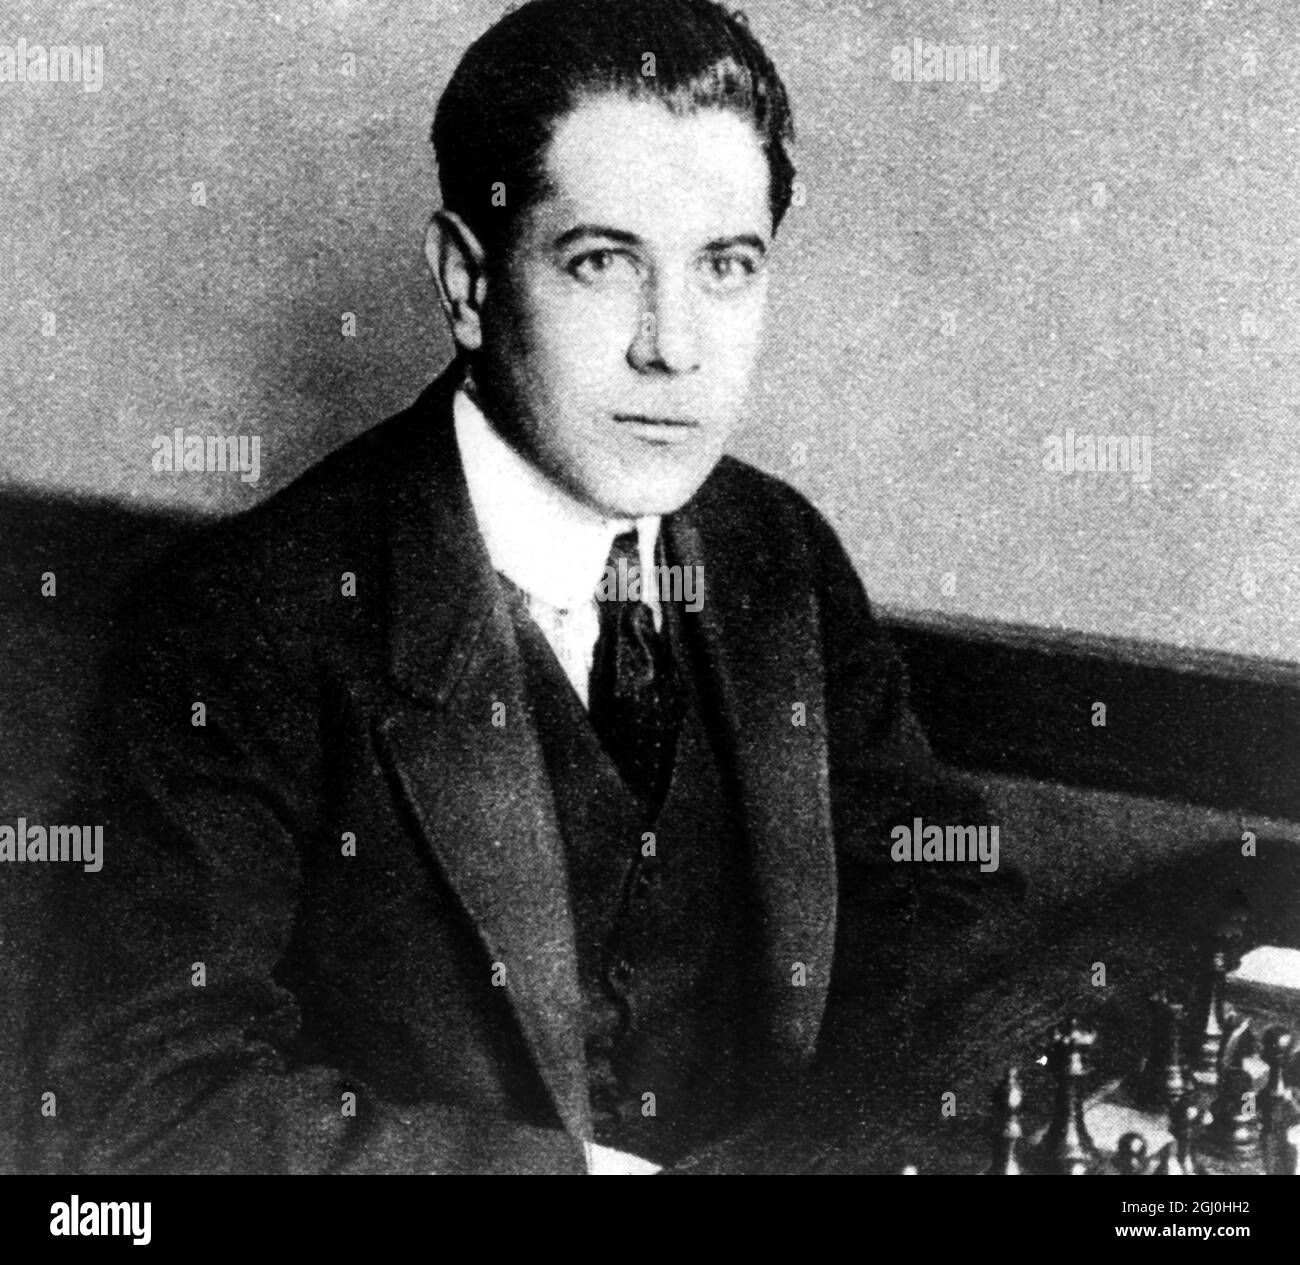 Alekhine Capablanca 1927 Stock Photo - Alamy